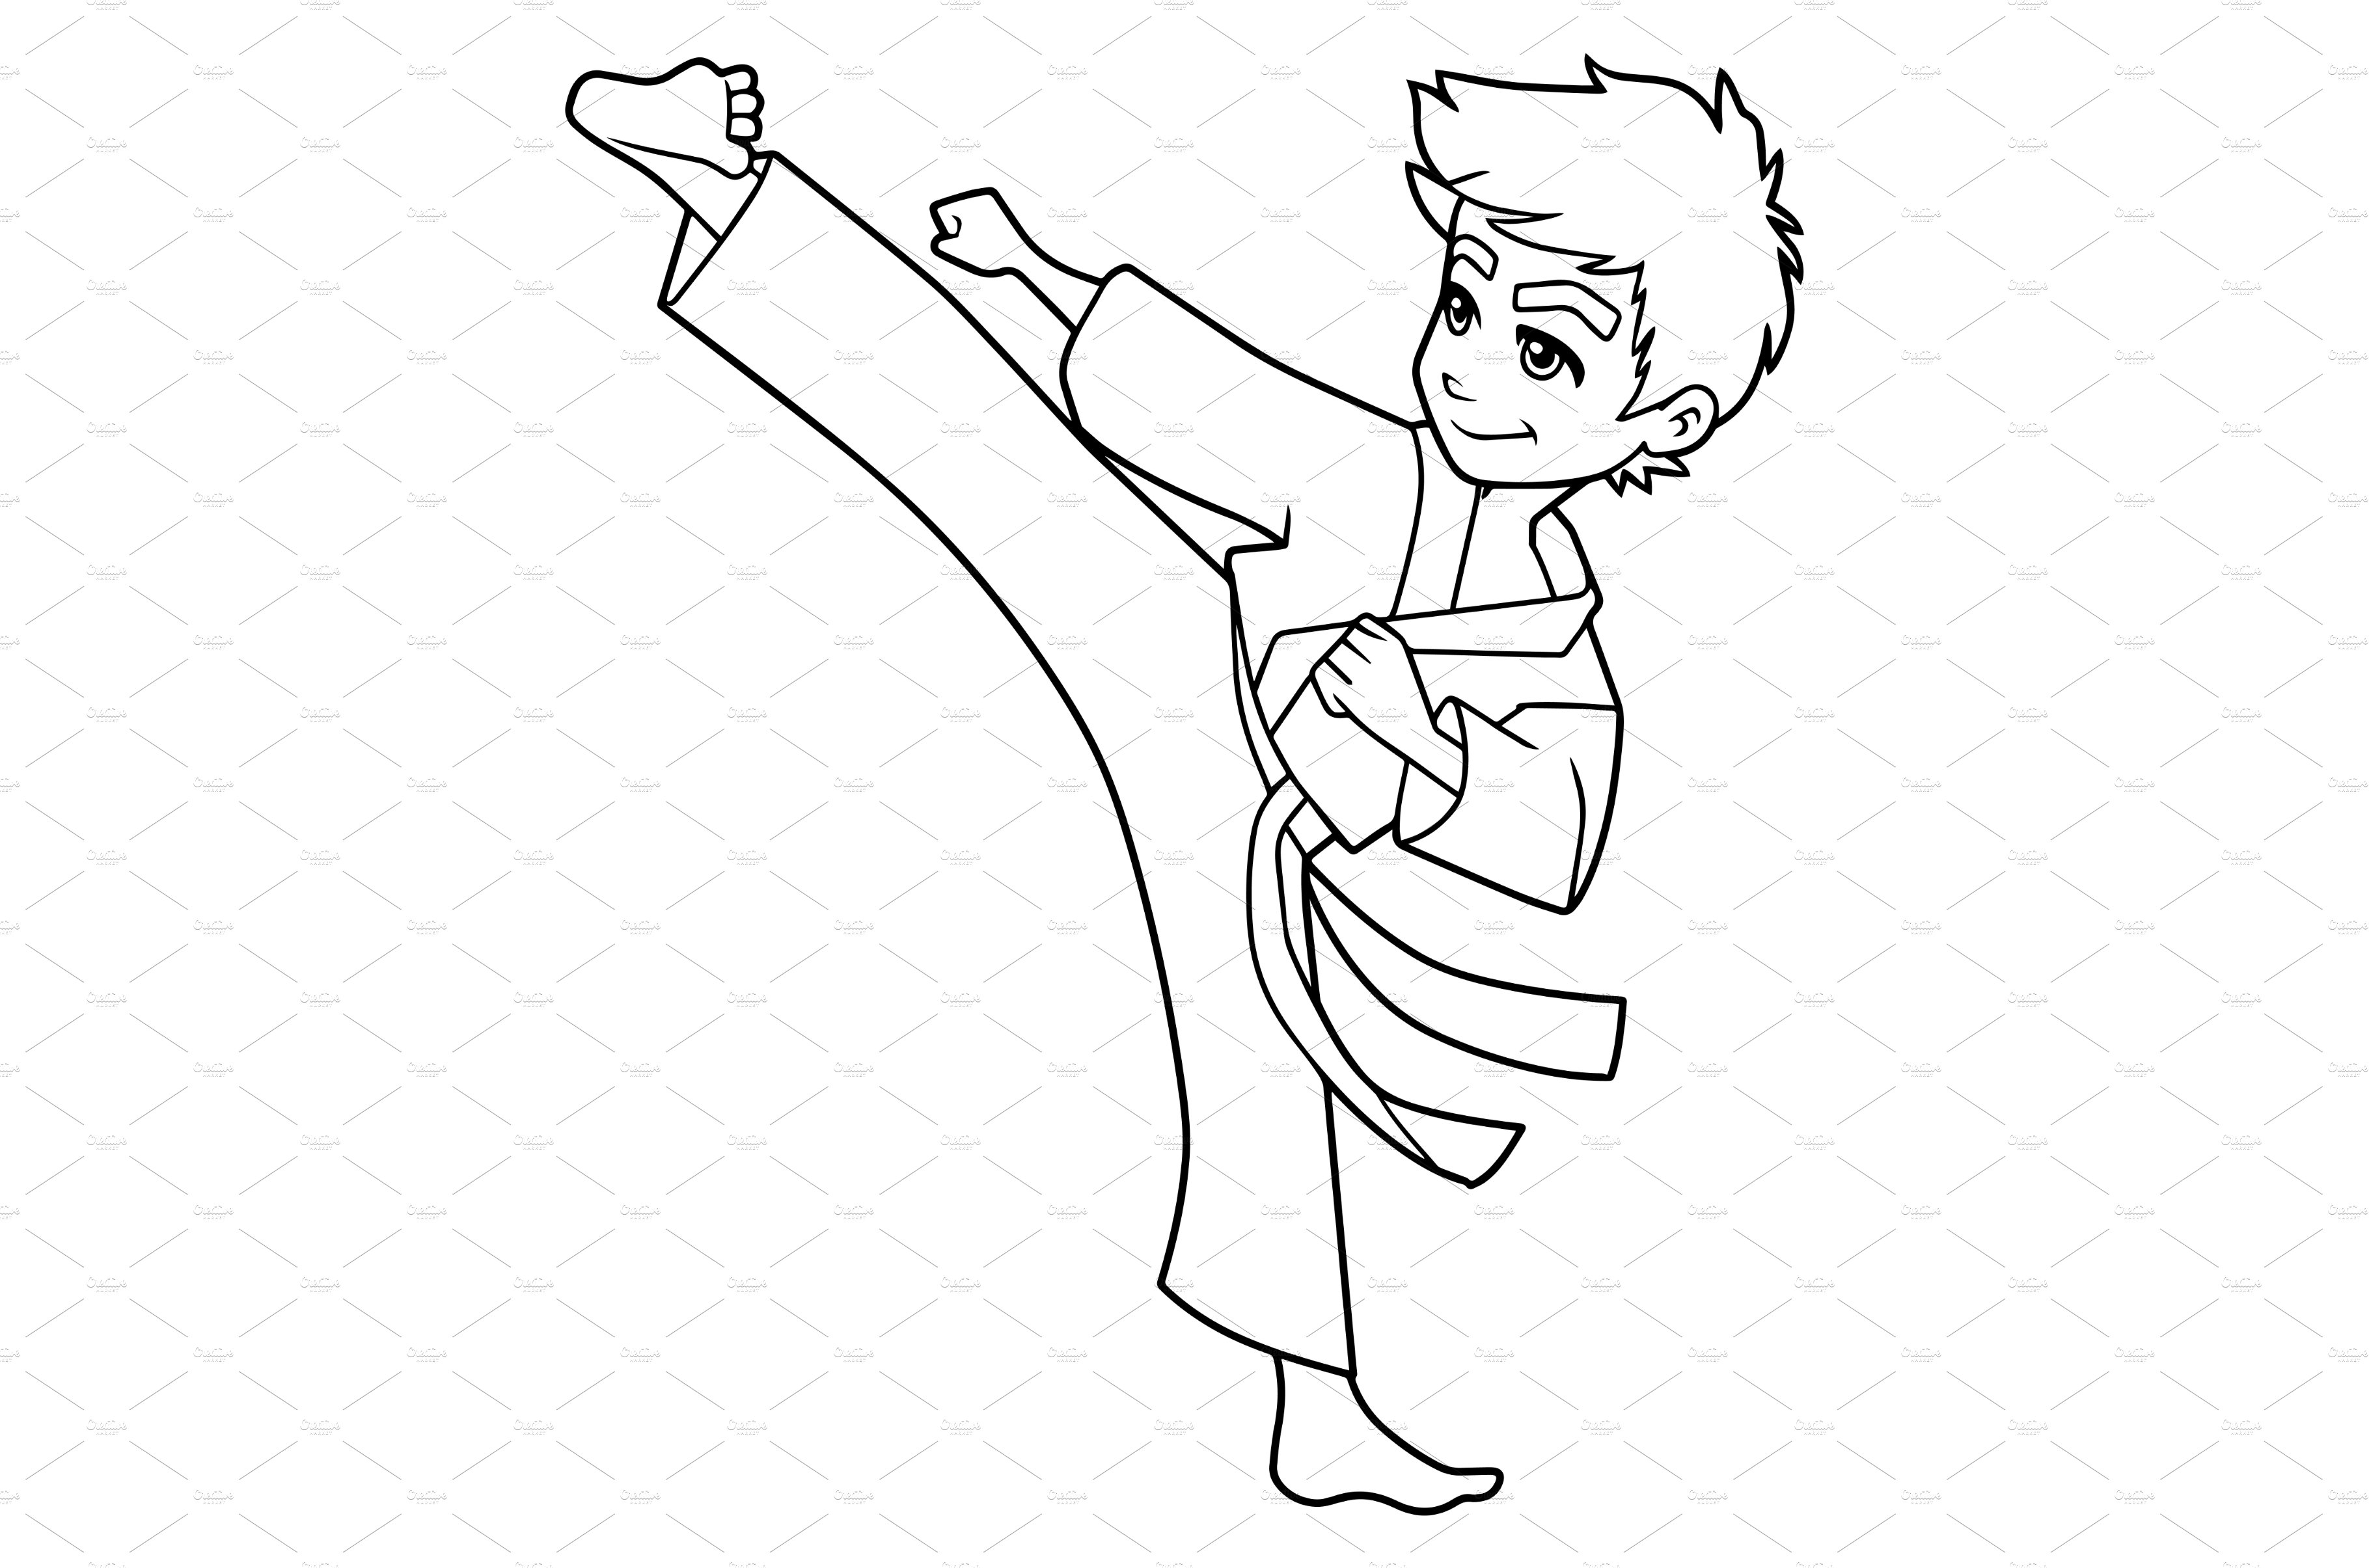 Karate Kick Boy Line Art cover image.